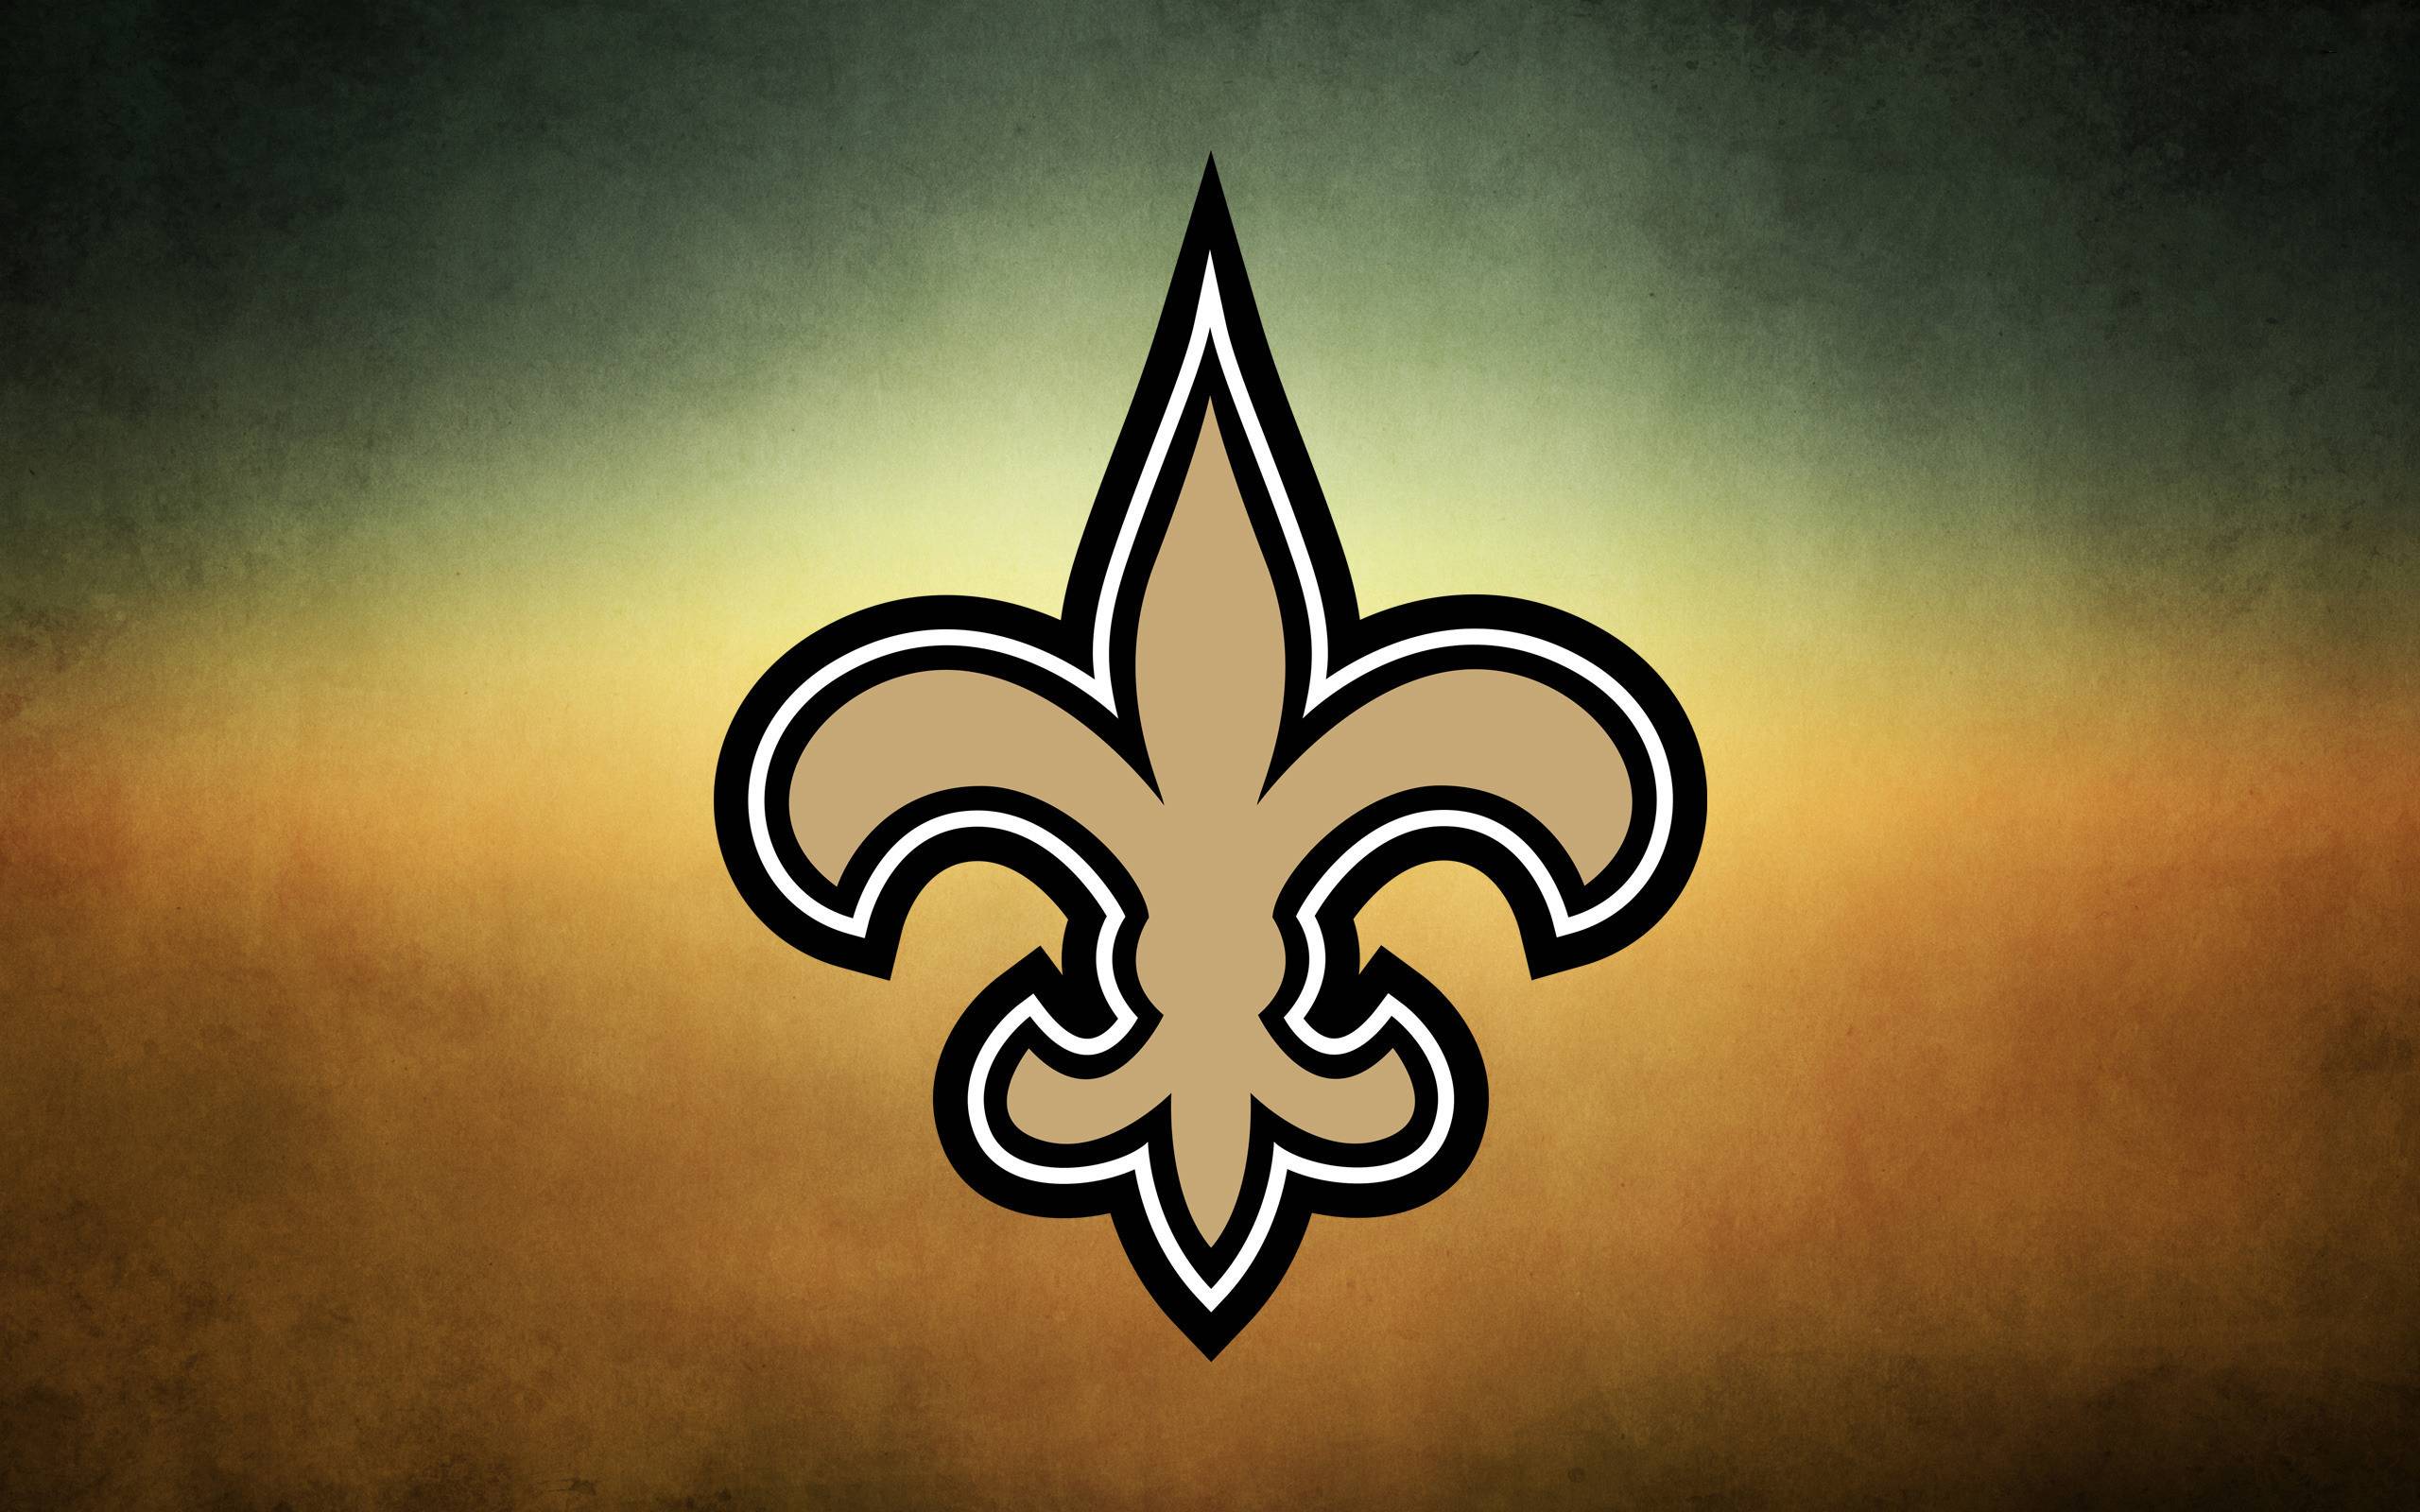 New Orleans Saints wallpaper by MizKjg  Download on ZEDGE  b7b0